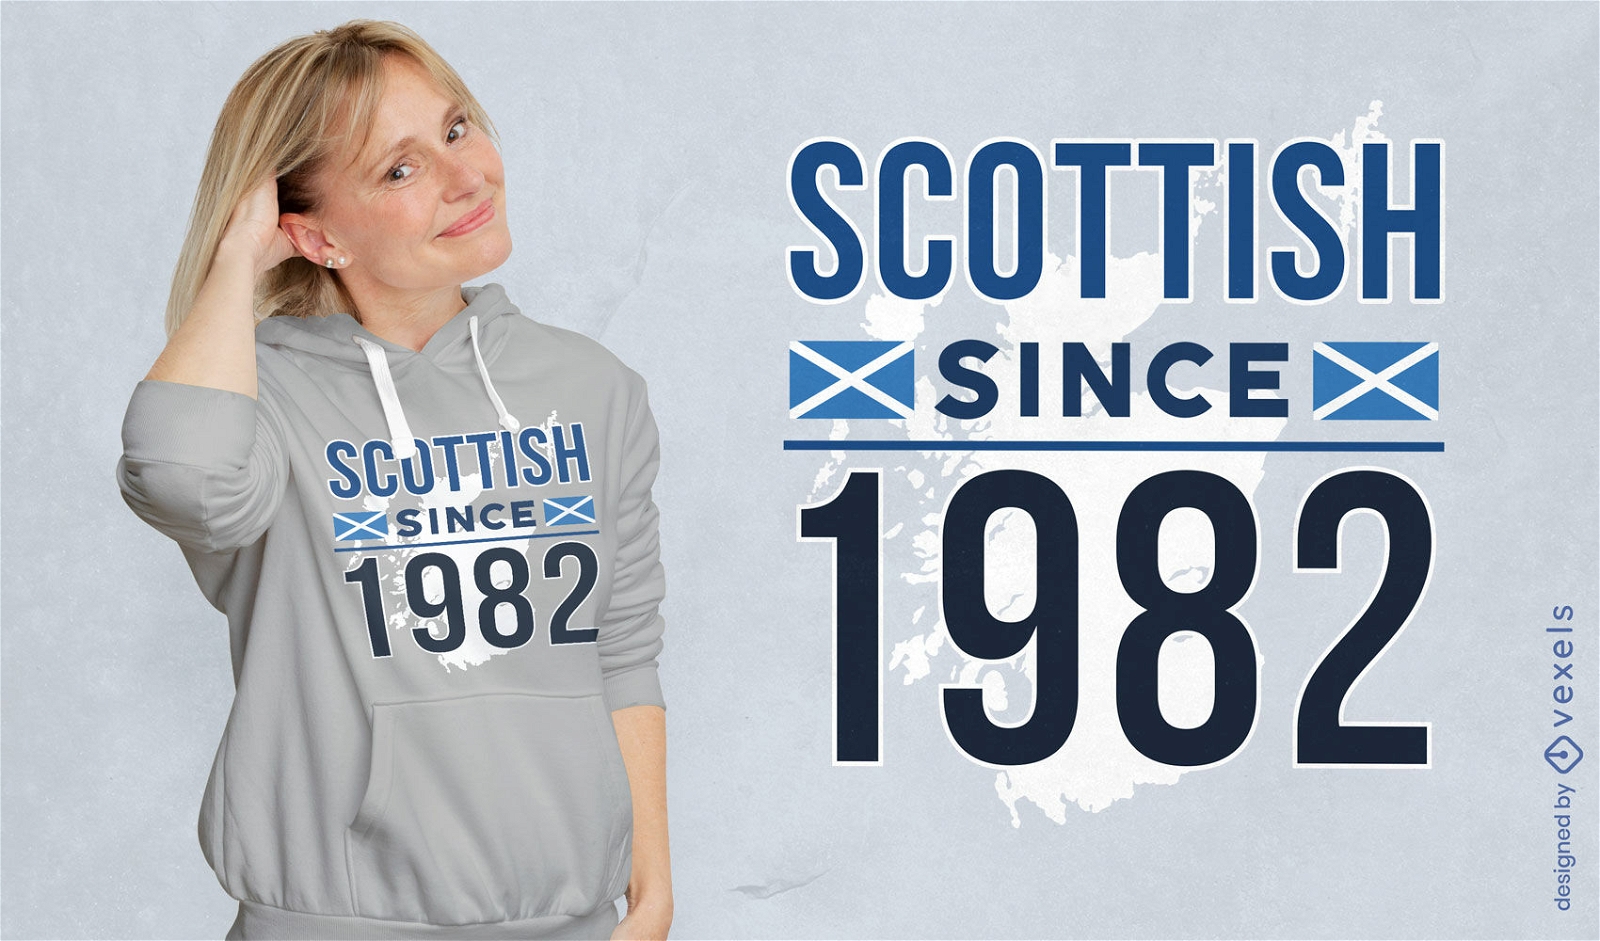 Scottish since 1982 t-shirt design